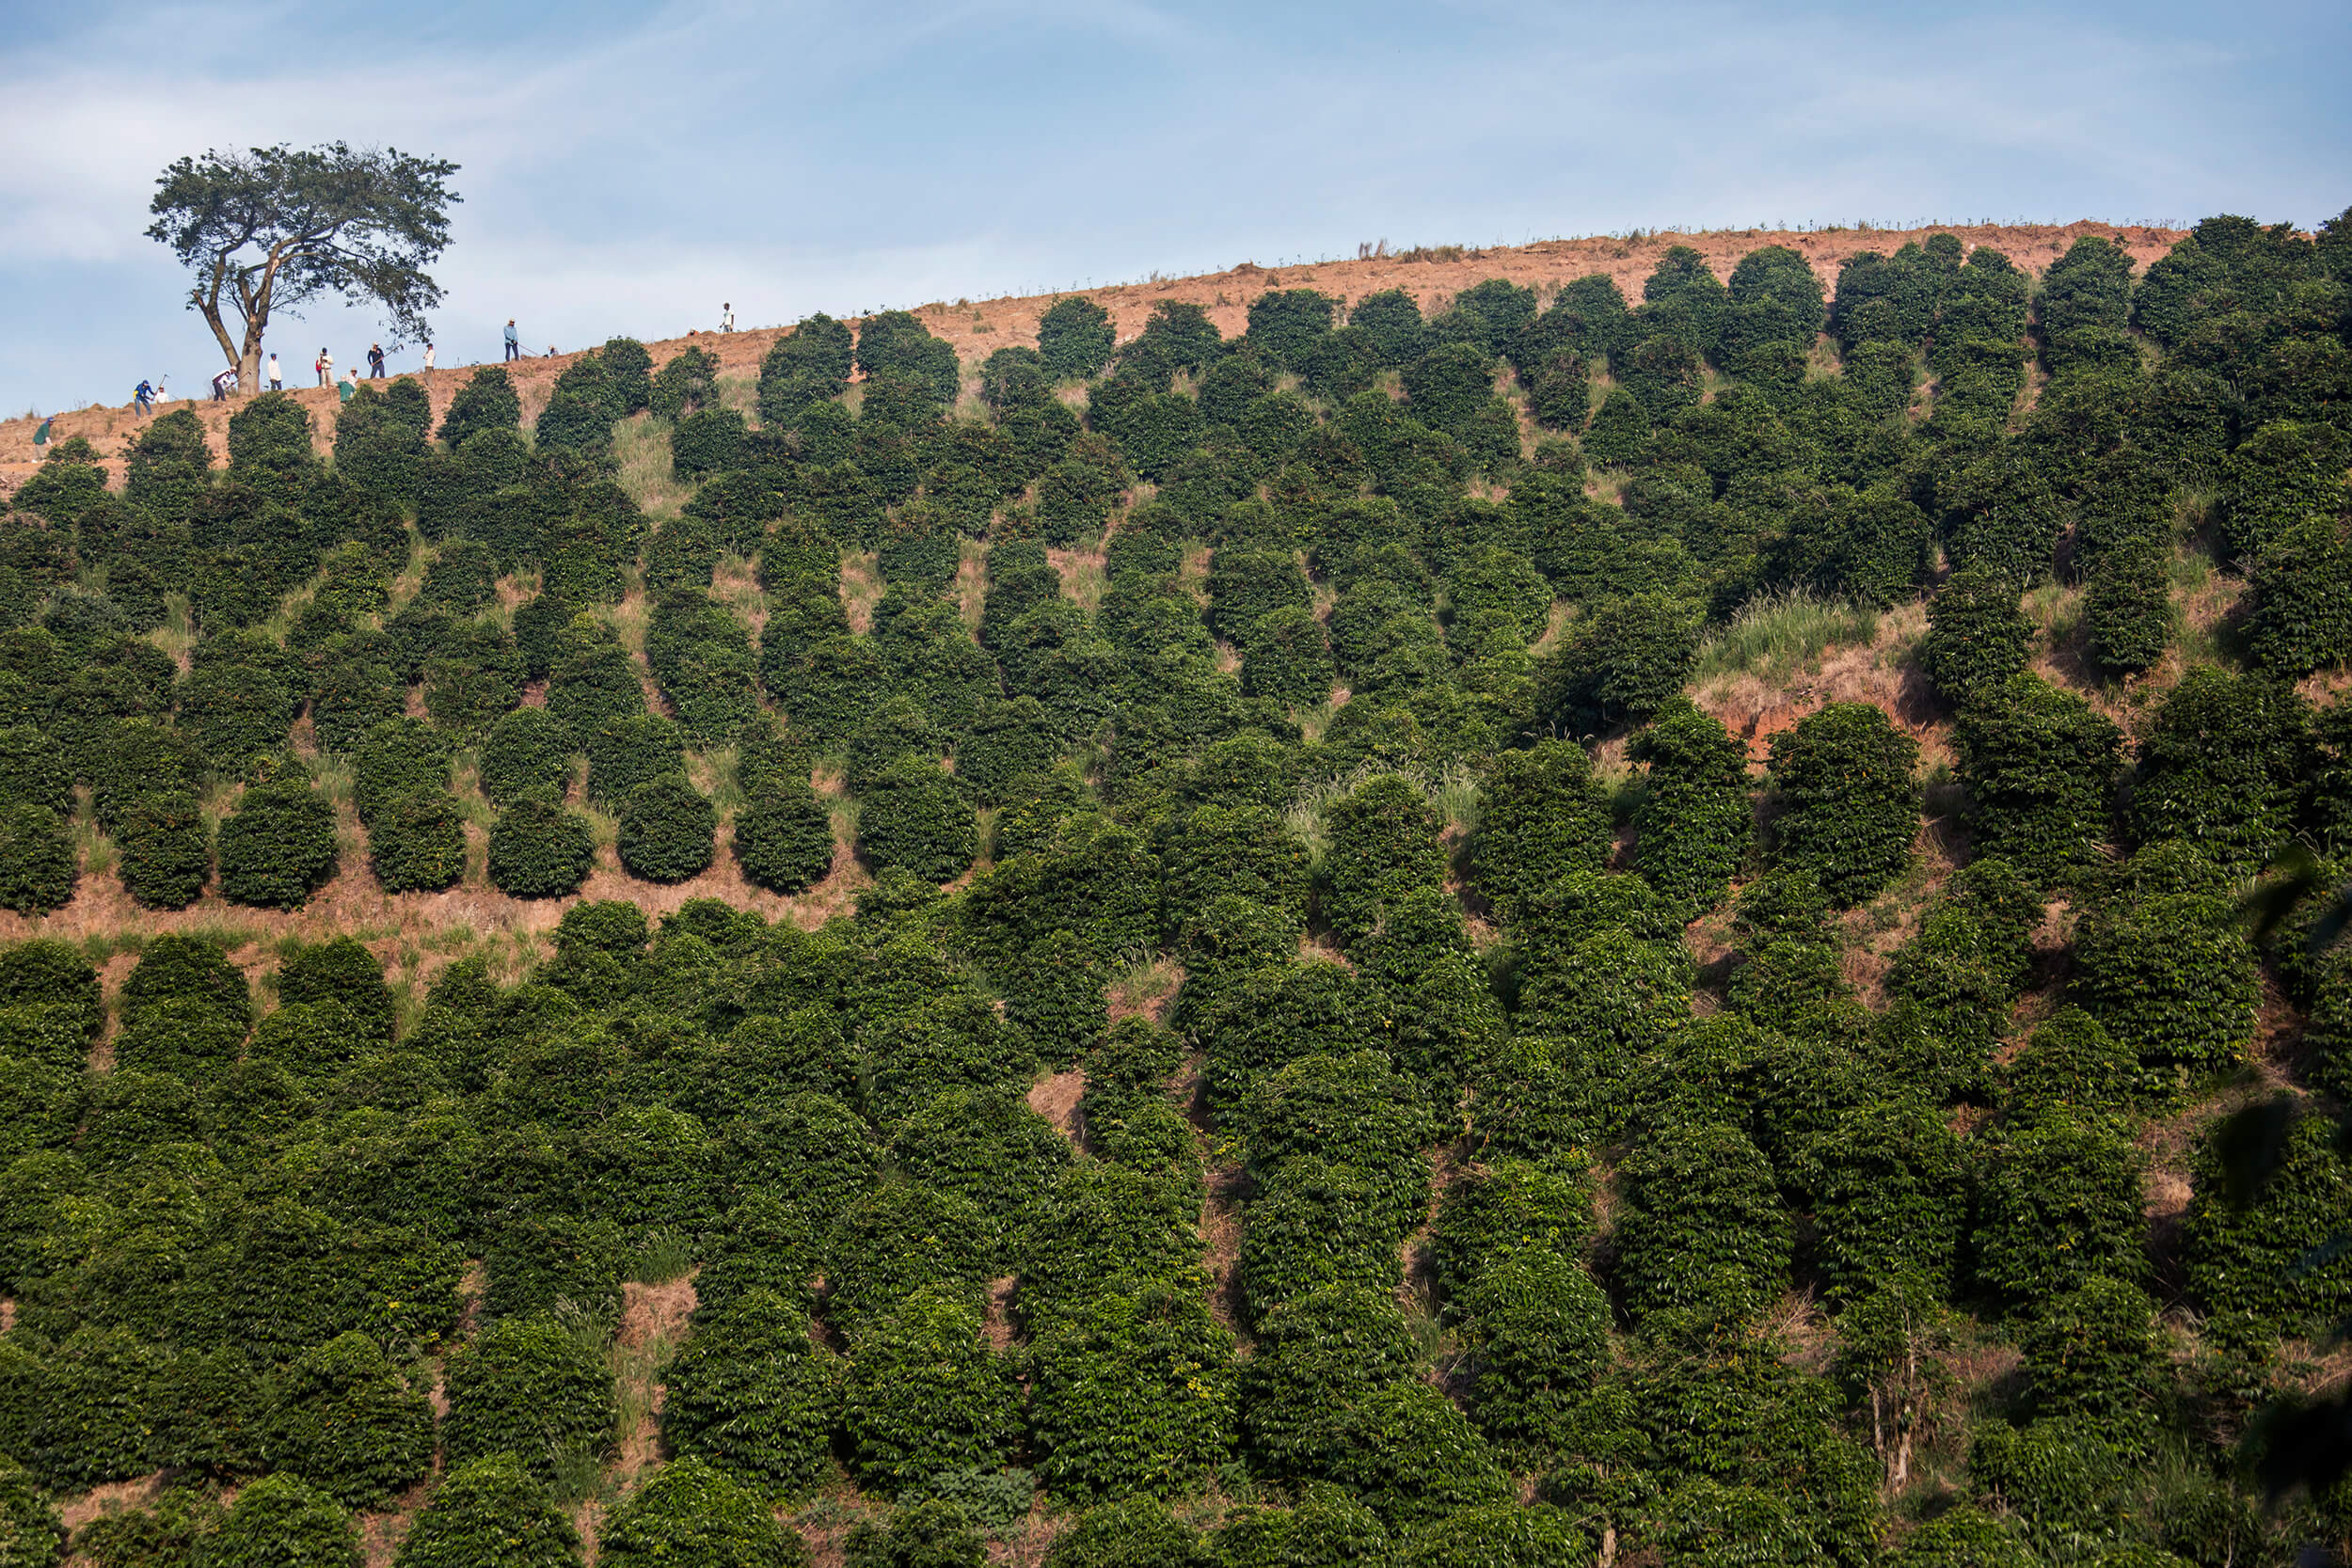  New planting and rejuvenation of coffee growing on the Rainha farm in Paçoa de Caldas. 